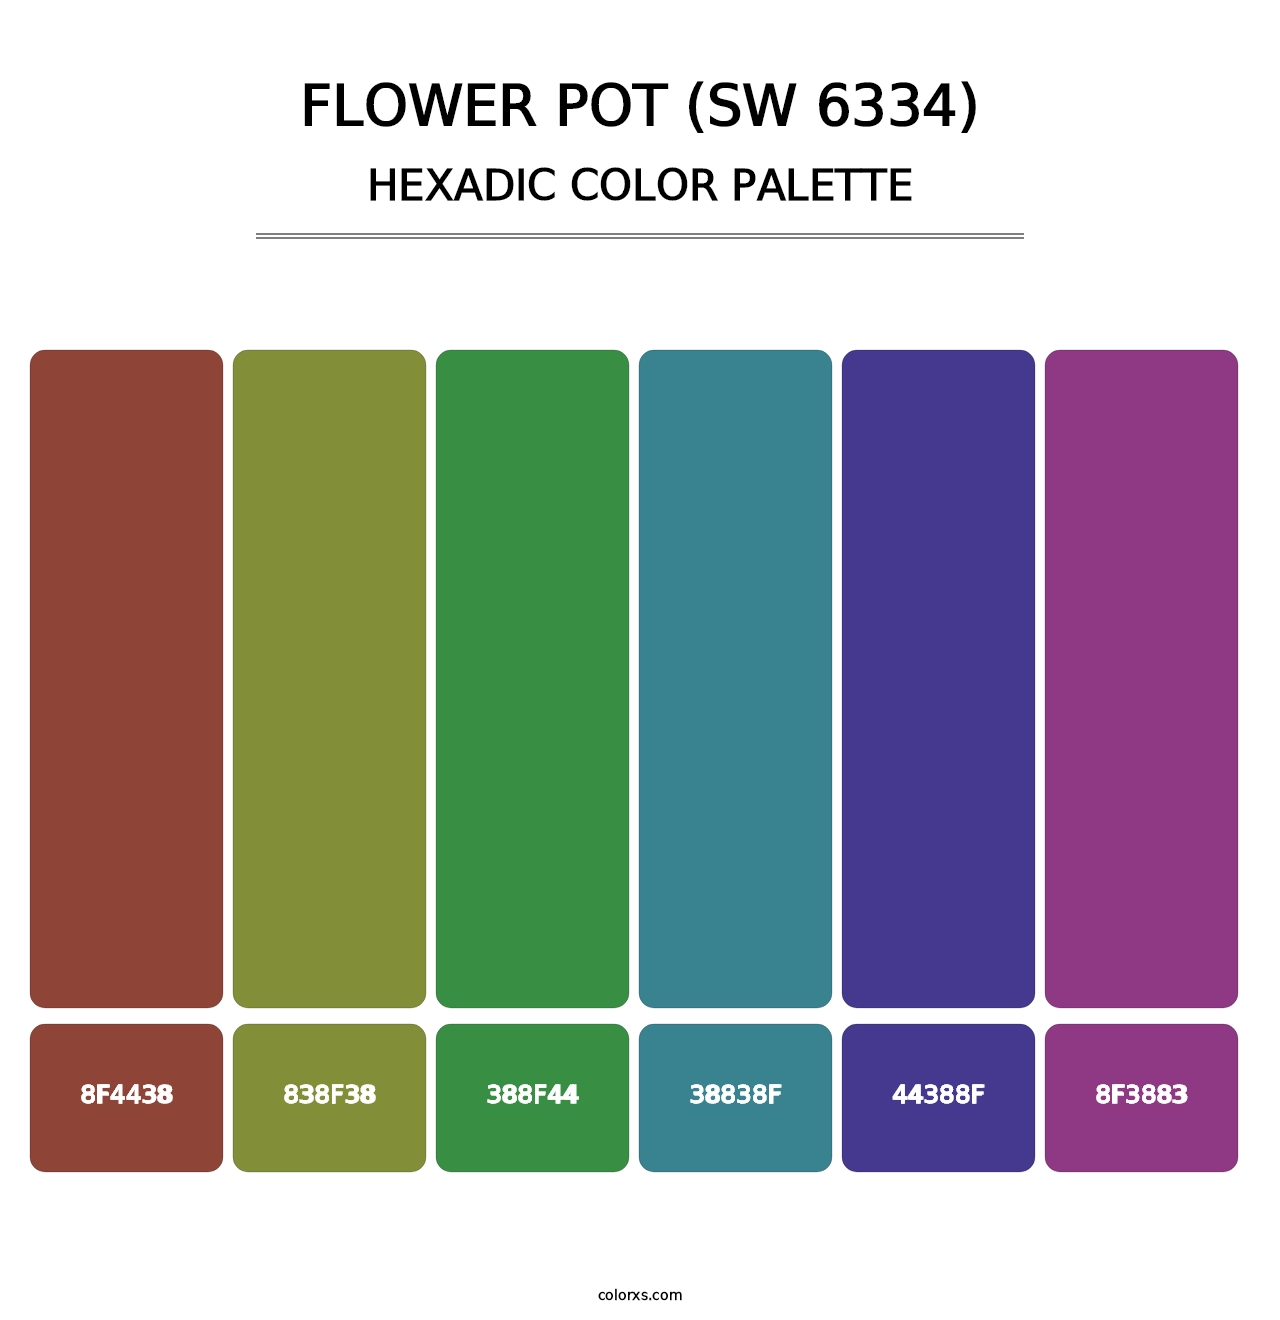 Flower Pot (SW 6334) - Hexadic Color Palette